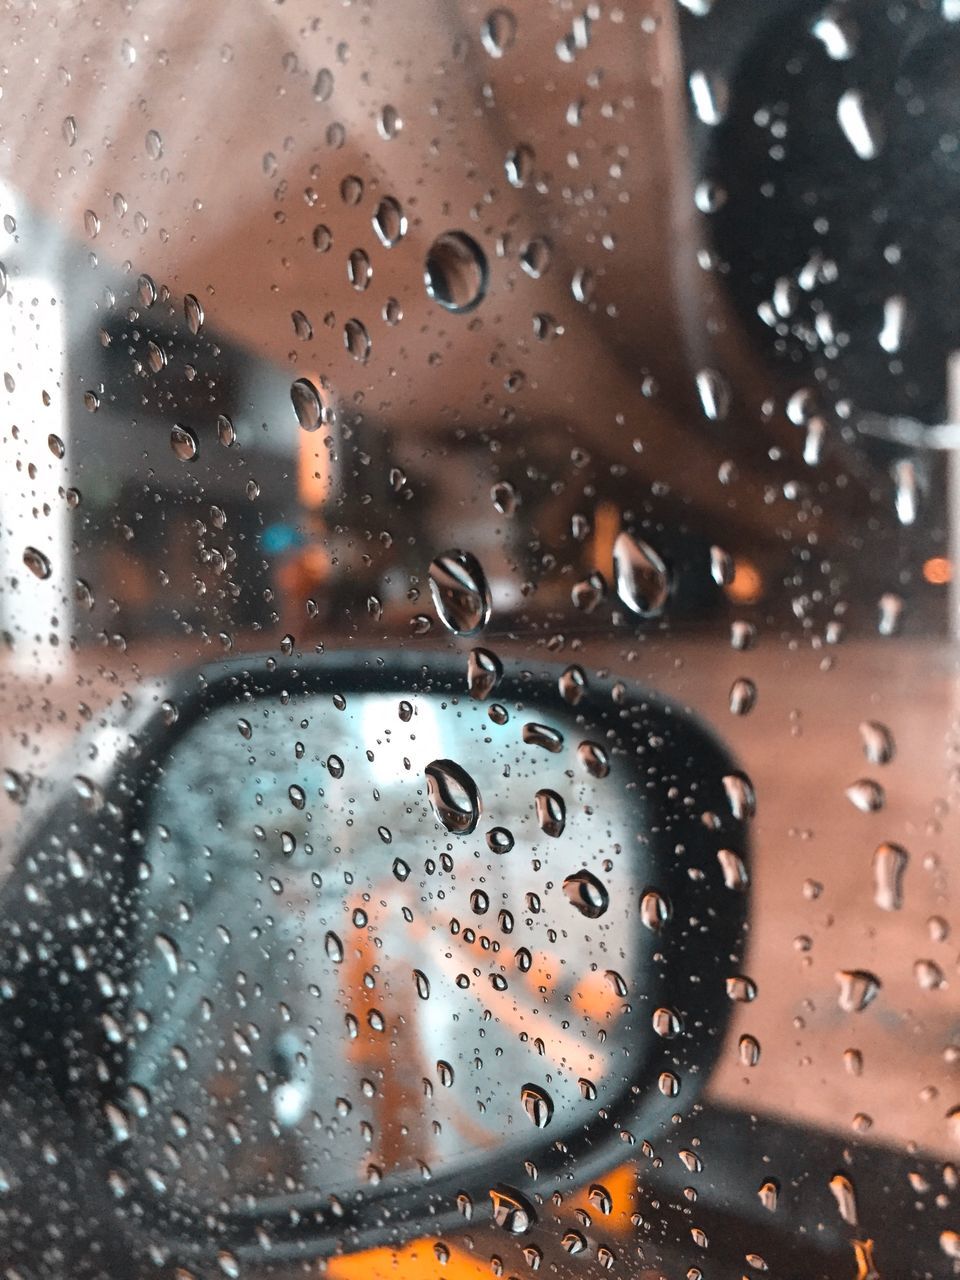 WATER DROPS ON GLASS WINDOW OF CAR